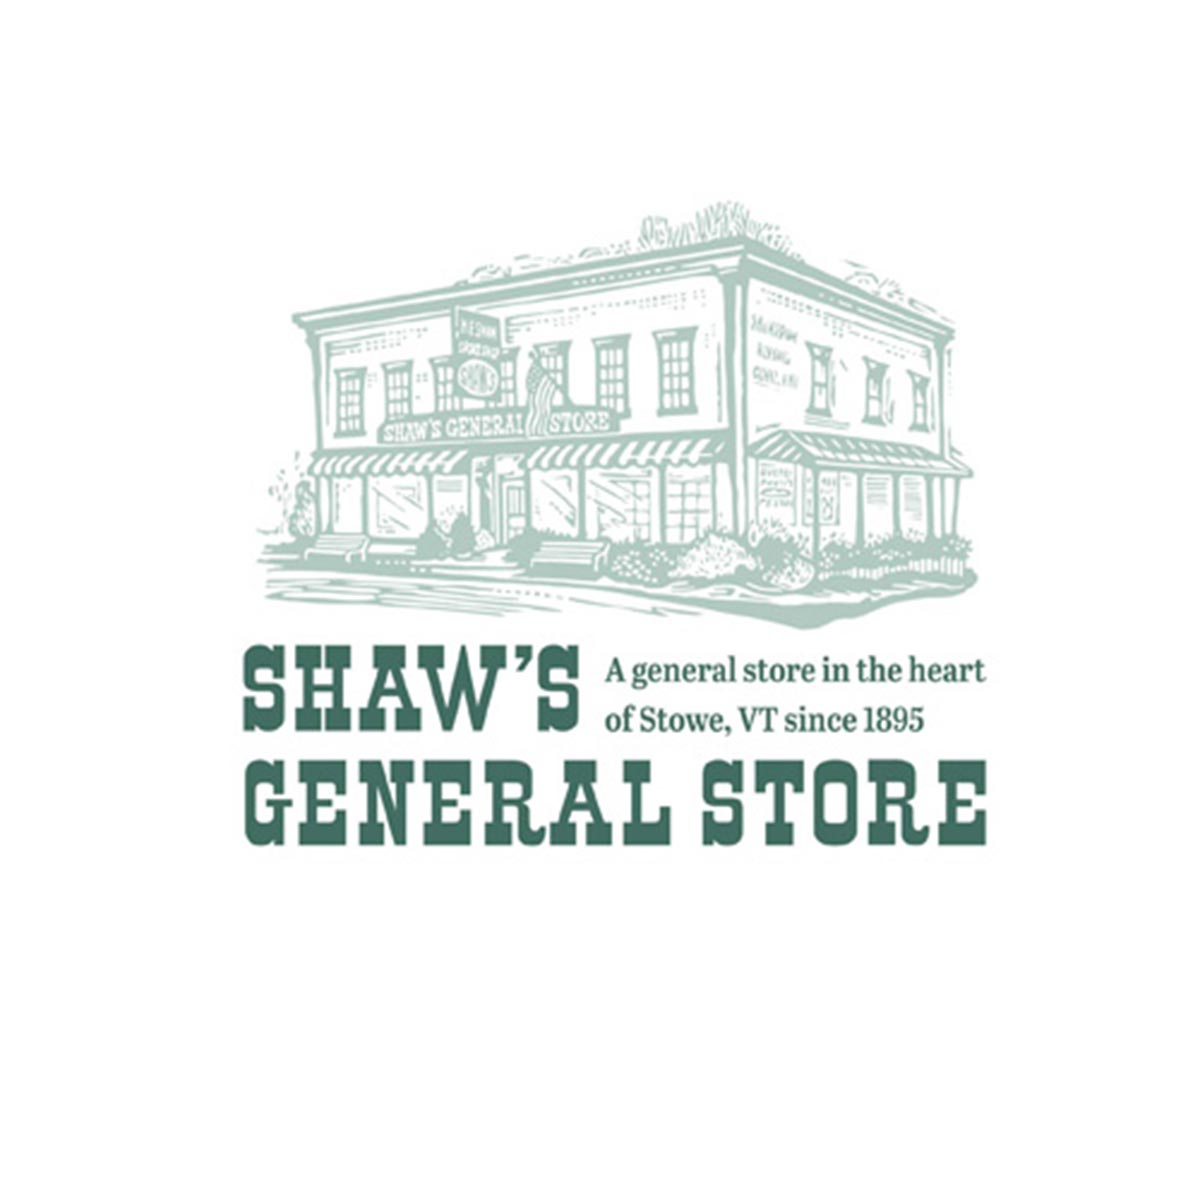 Shaws General Store